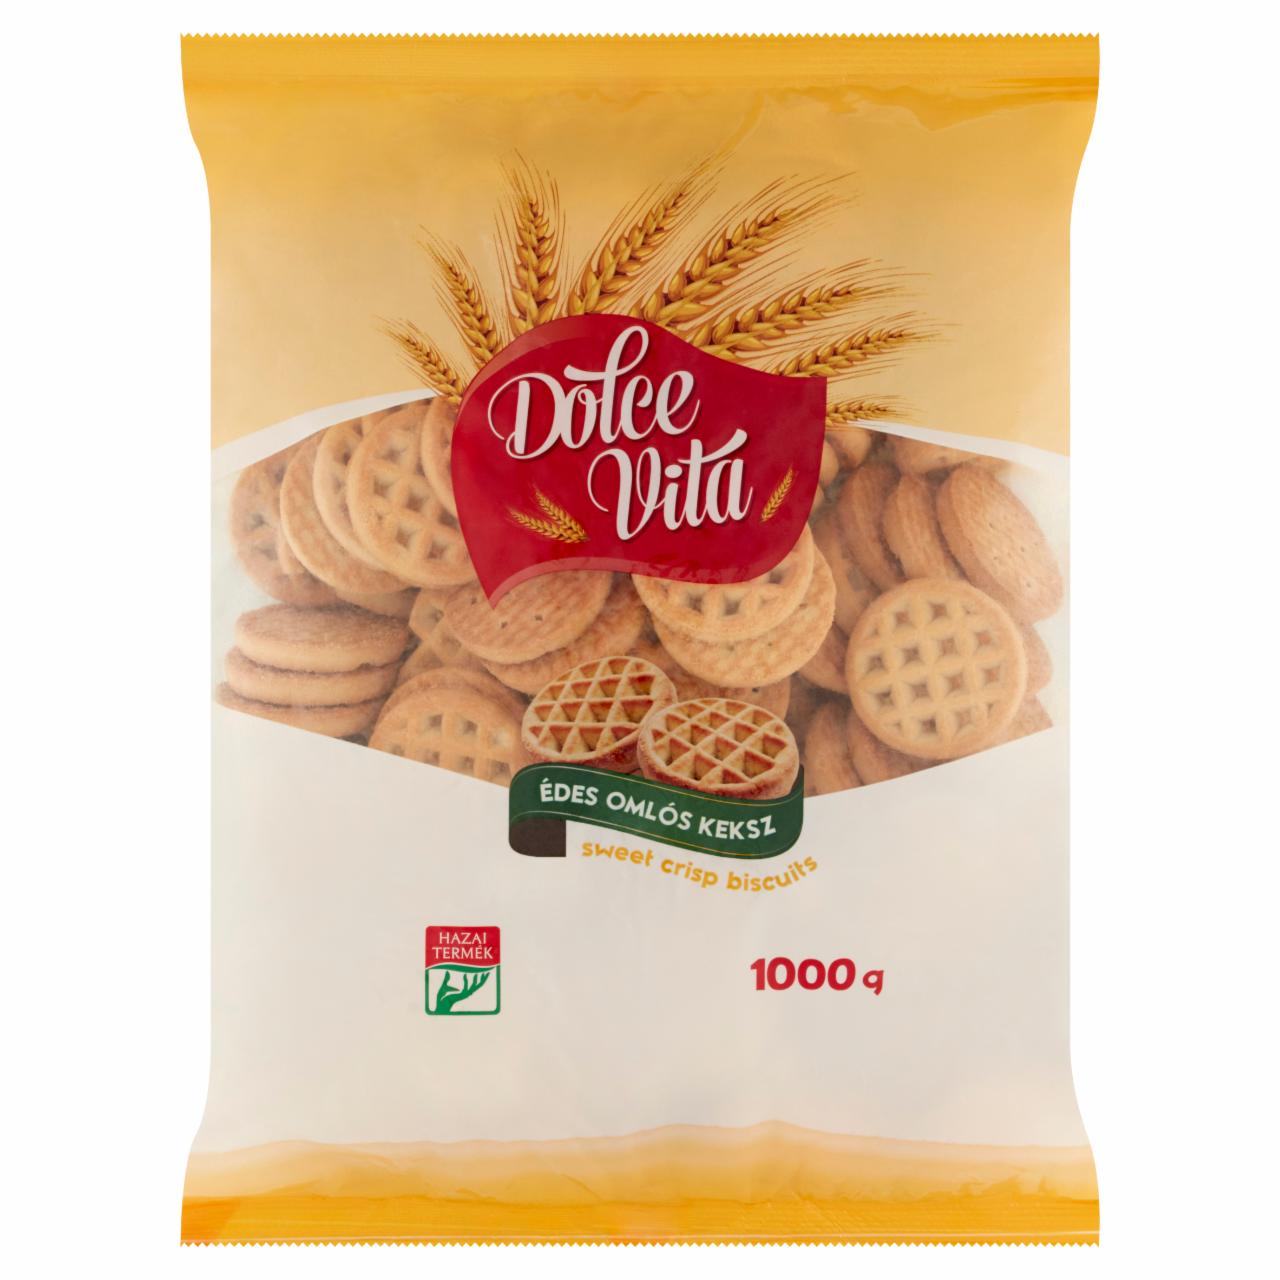 Képek - Dolce Vita édes omlós keksz 1000 g